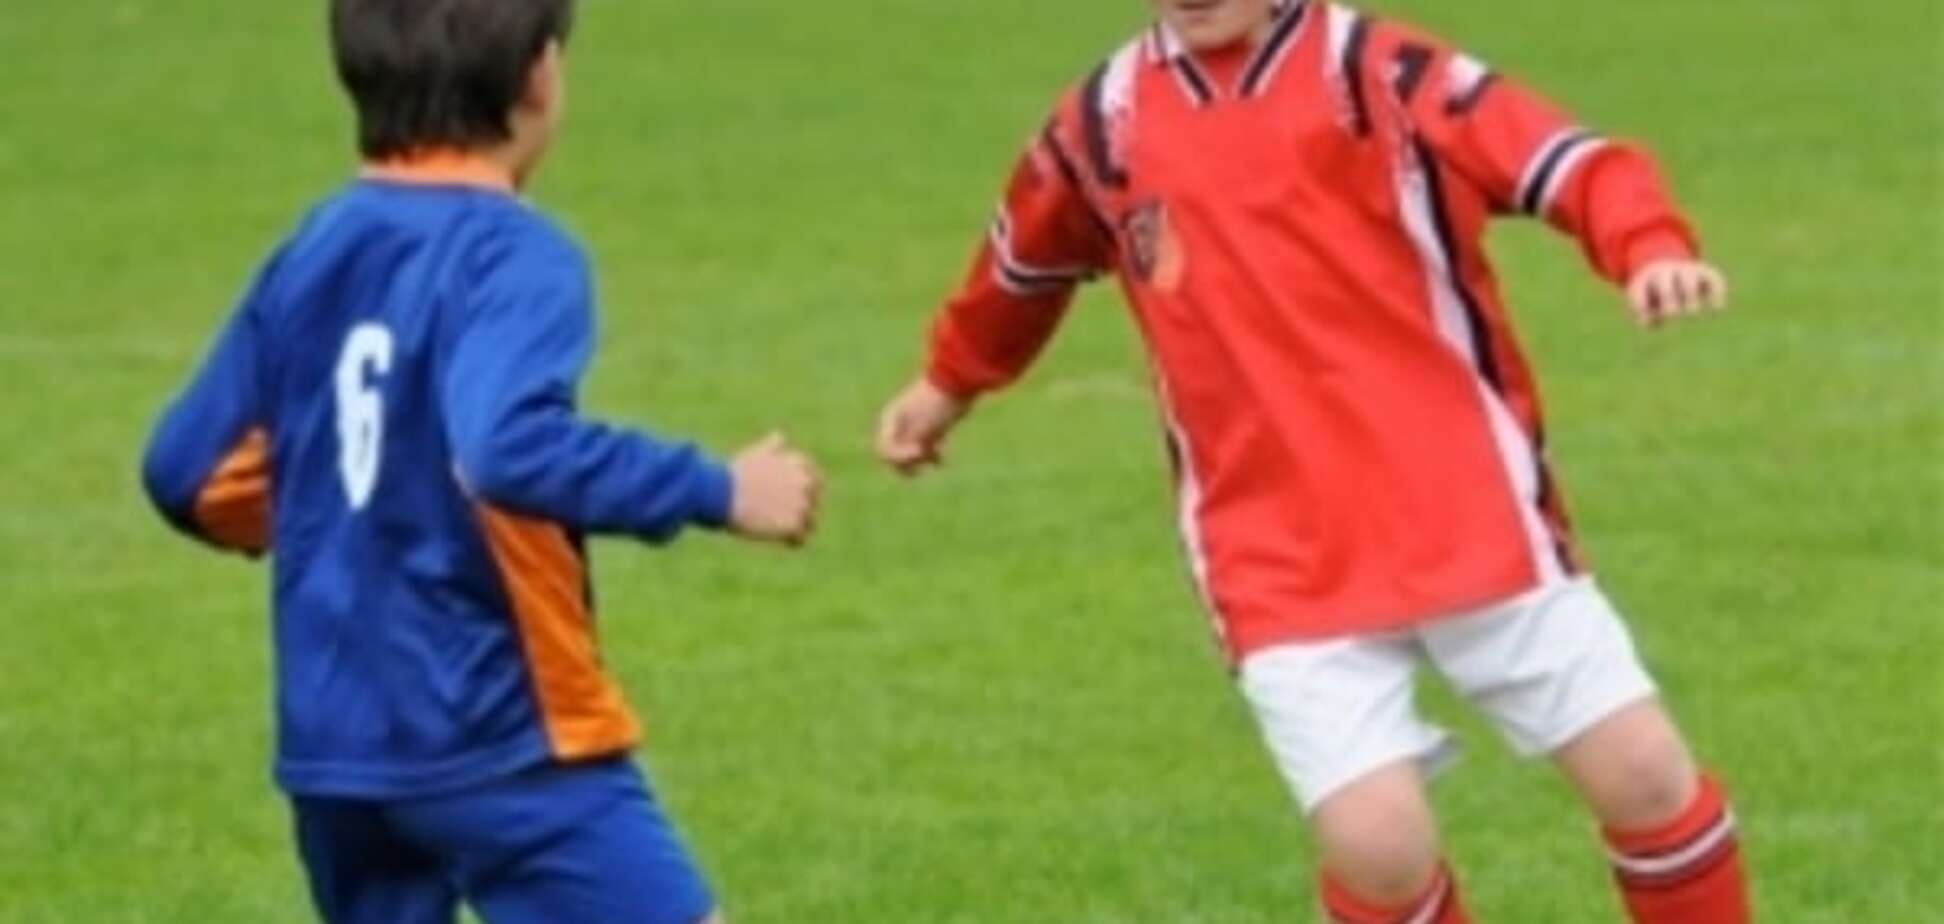 Футбольний тренер київського клубу спокусив 11-річного хлопчика